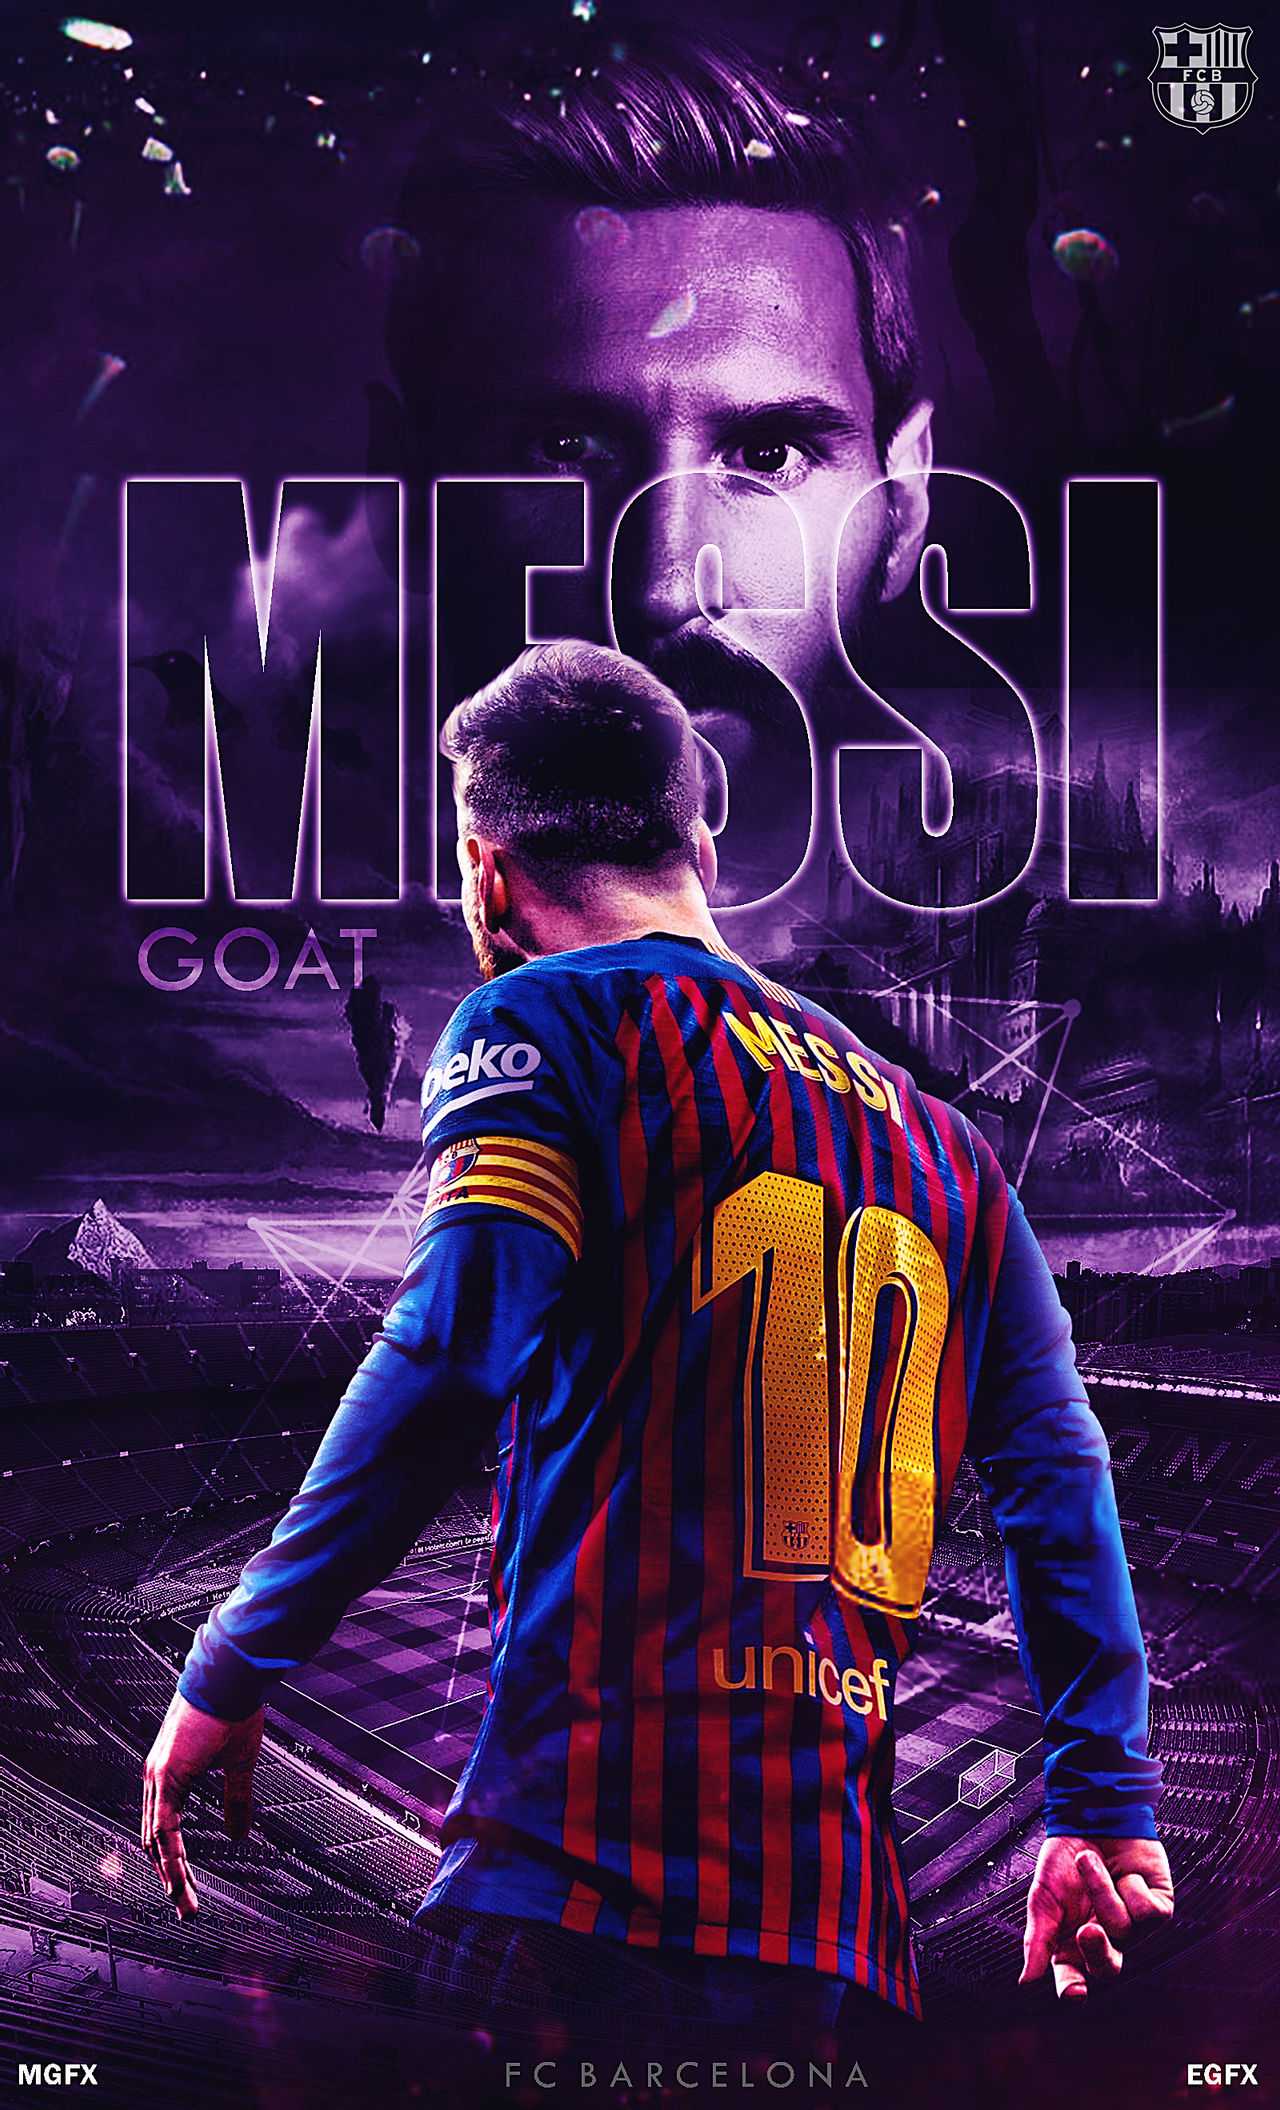 Lionel Messi Wallpaper Hd Cheap Prices, Save 65% | jlcatj.gob.mx